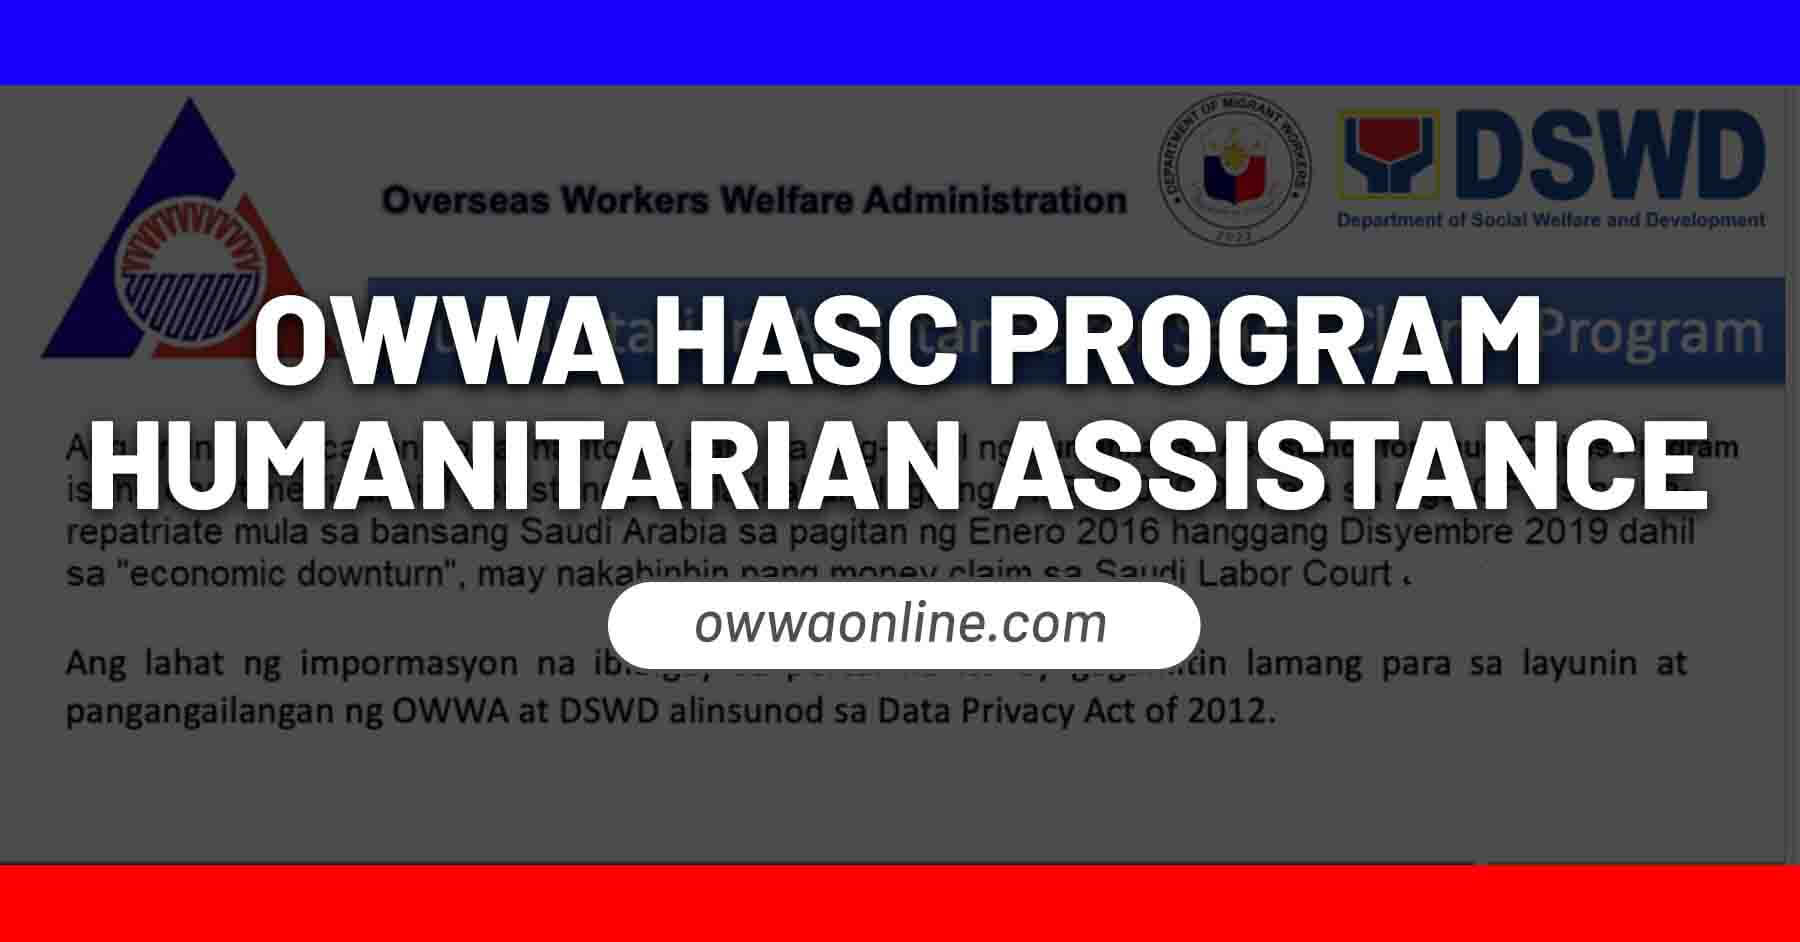 owwa hasc program humanitarian assistance for saudi claims